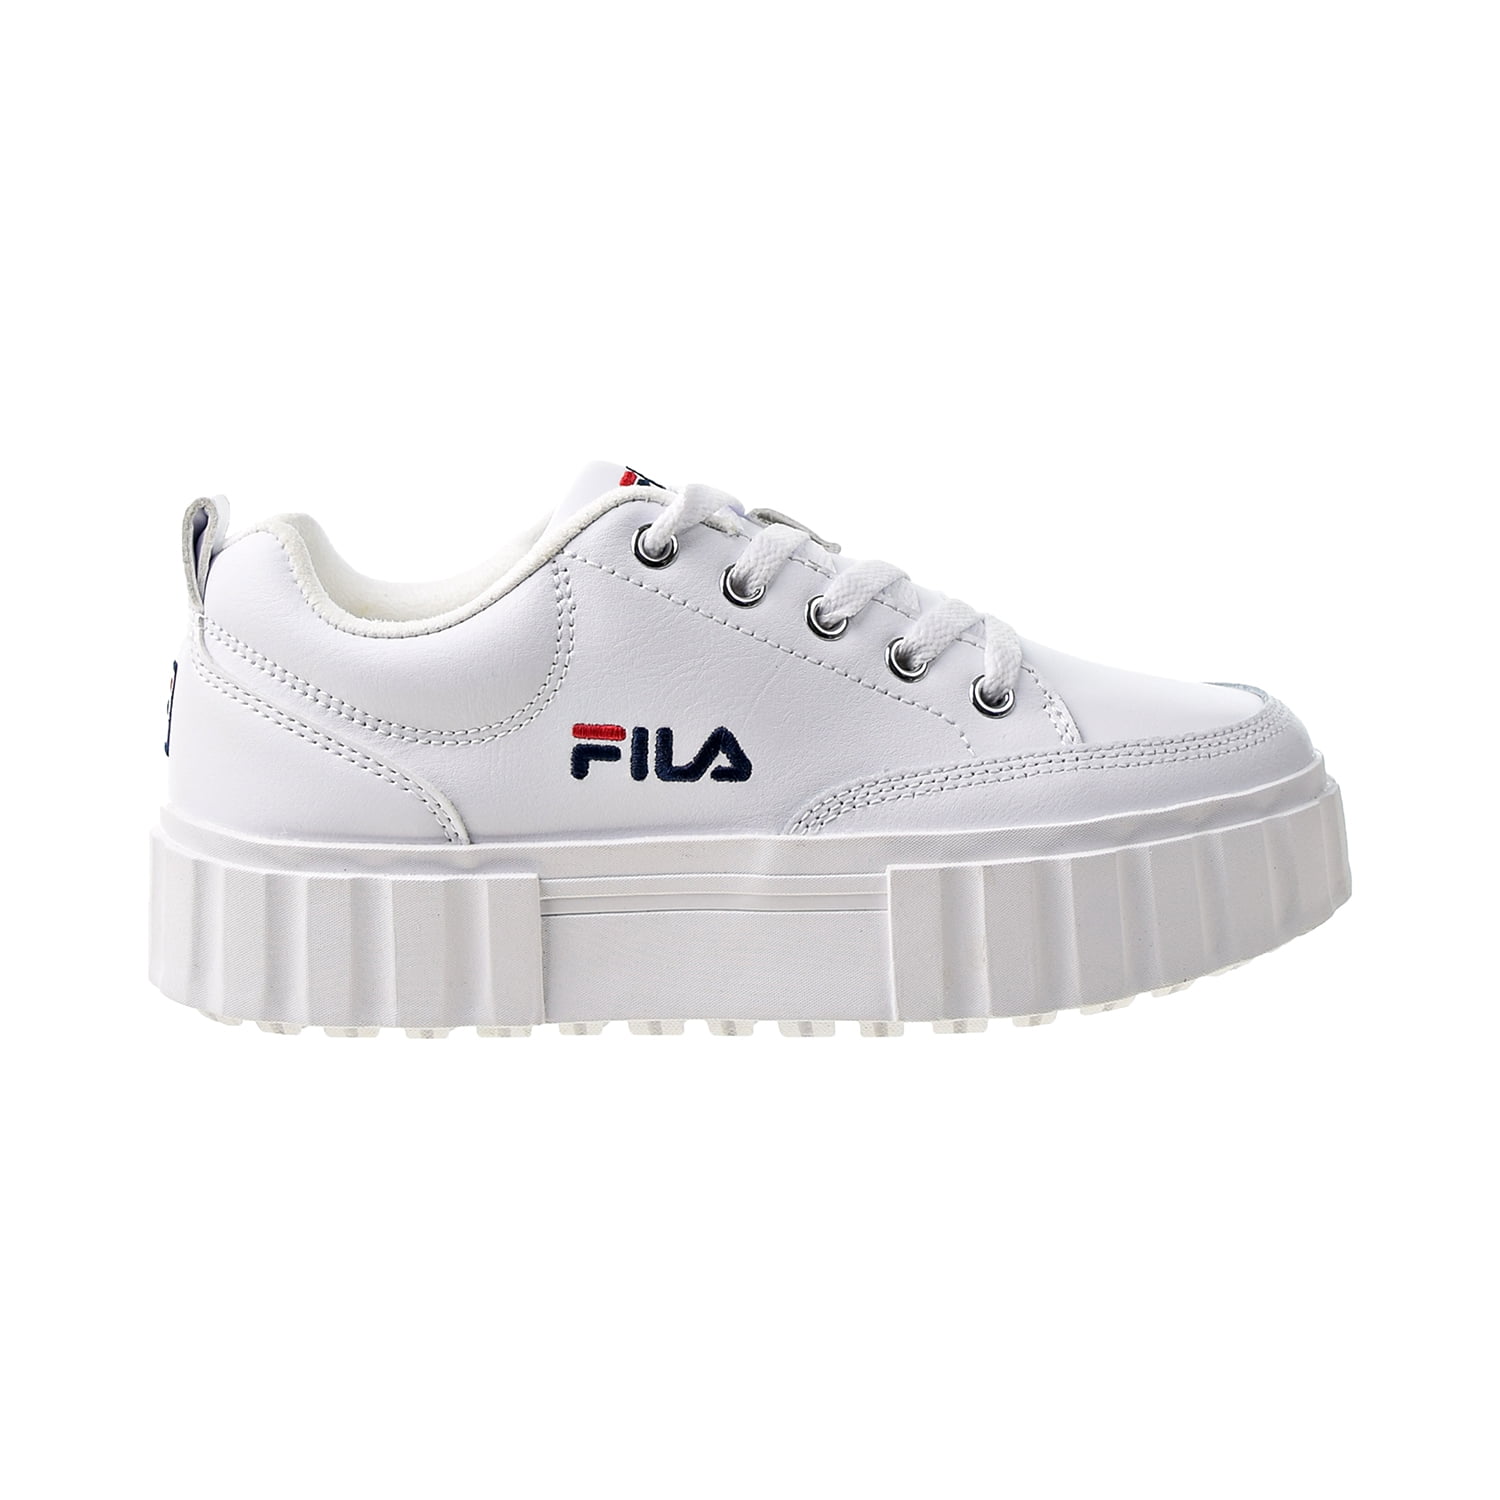 Fila Sandblast Low Women's Shoes White-Navy-Red 5cm01213-125 -